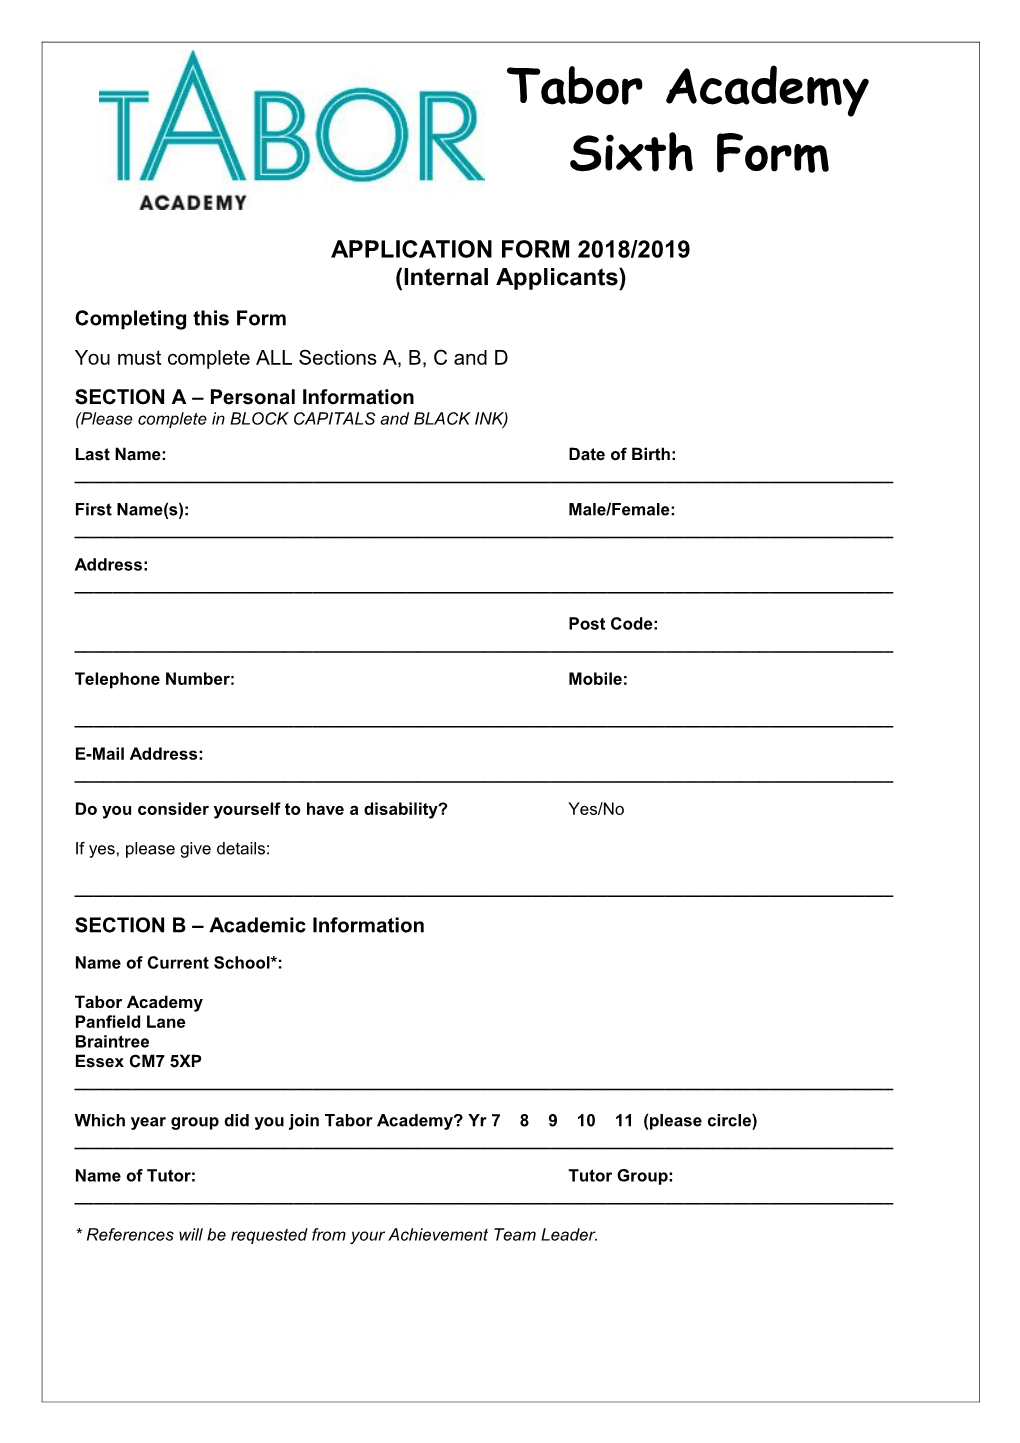 Application Form 2018/2019